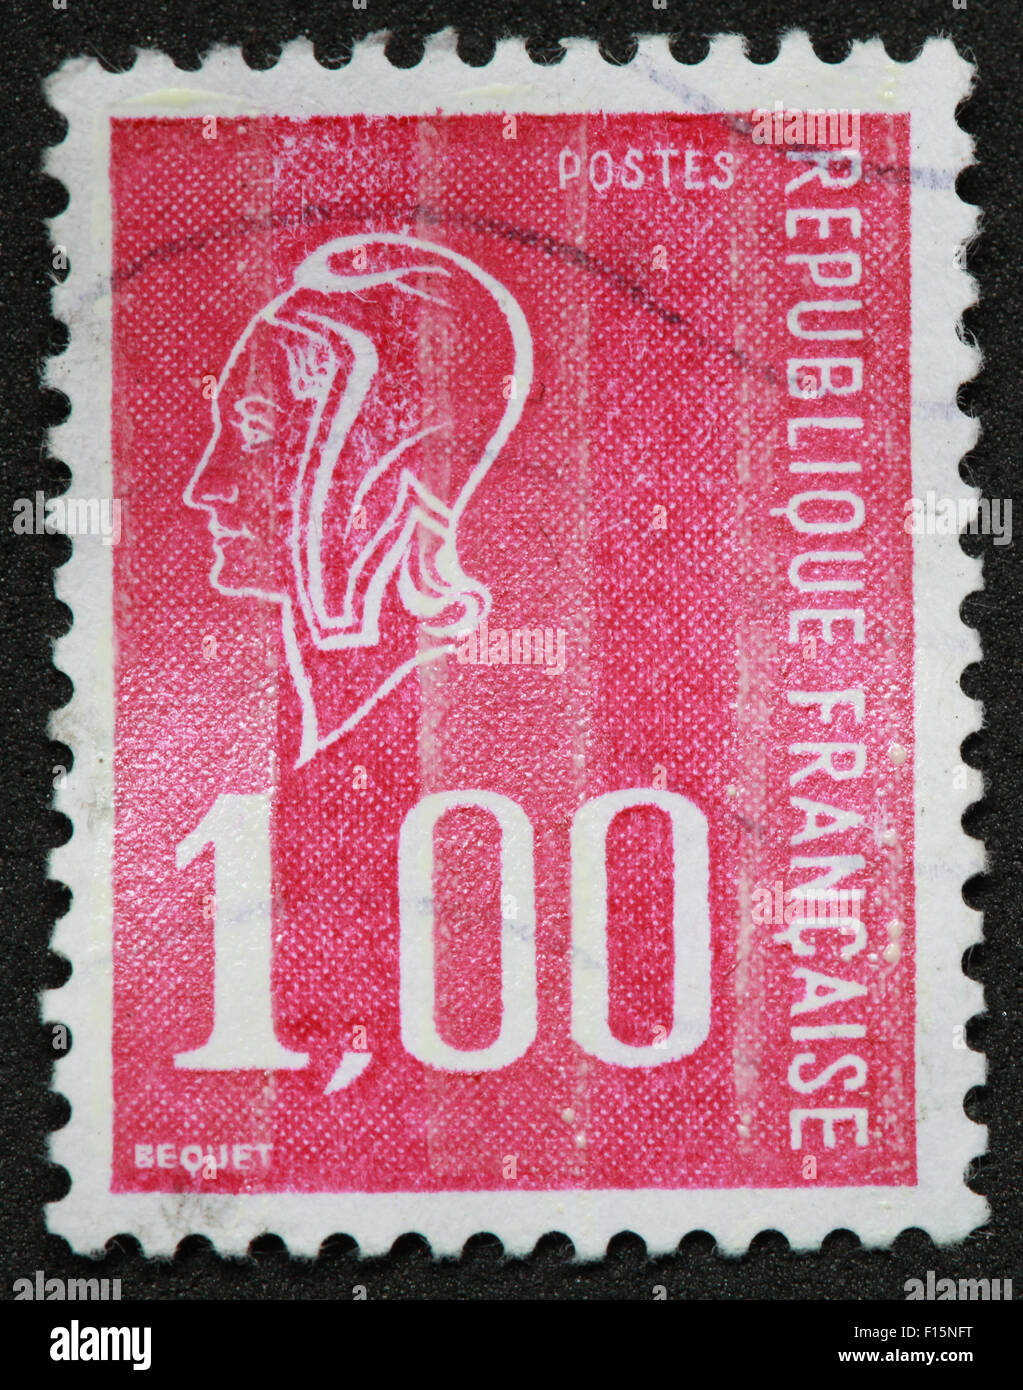 1F 1,00 Postes Republique Francaise BEQUET Gesicht rosa roten Stempel Stockfoto